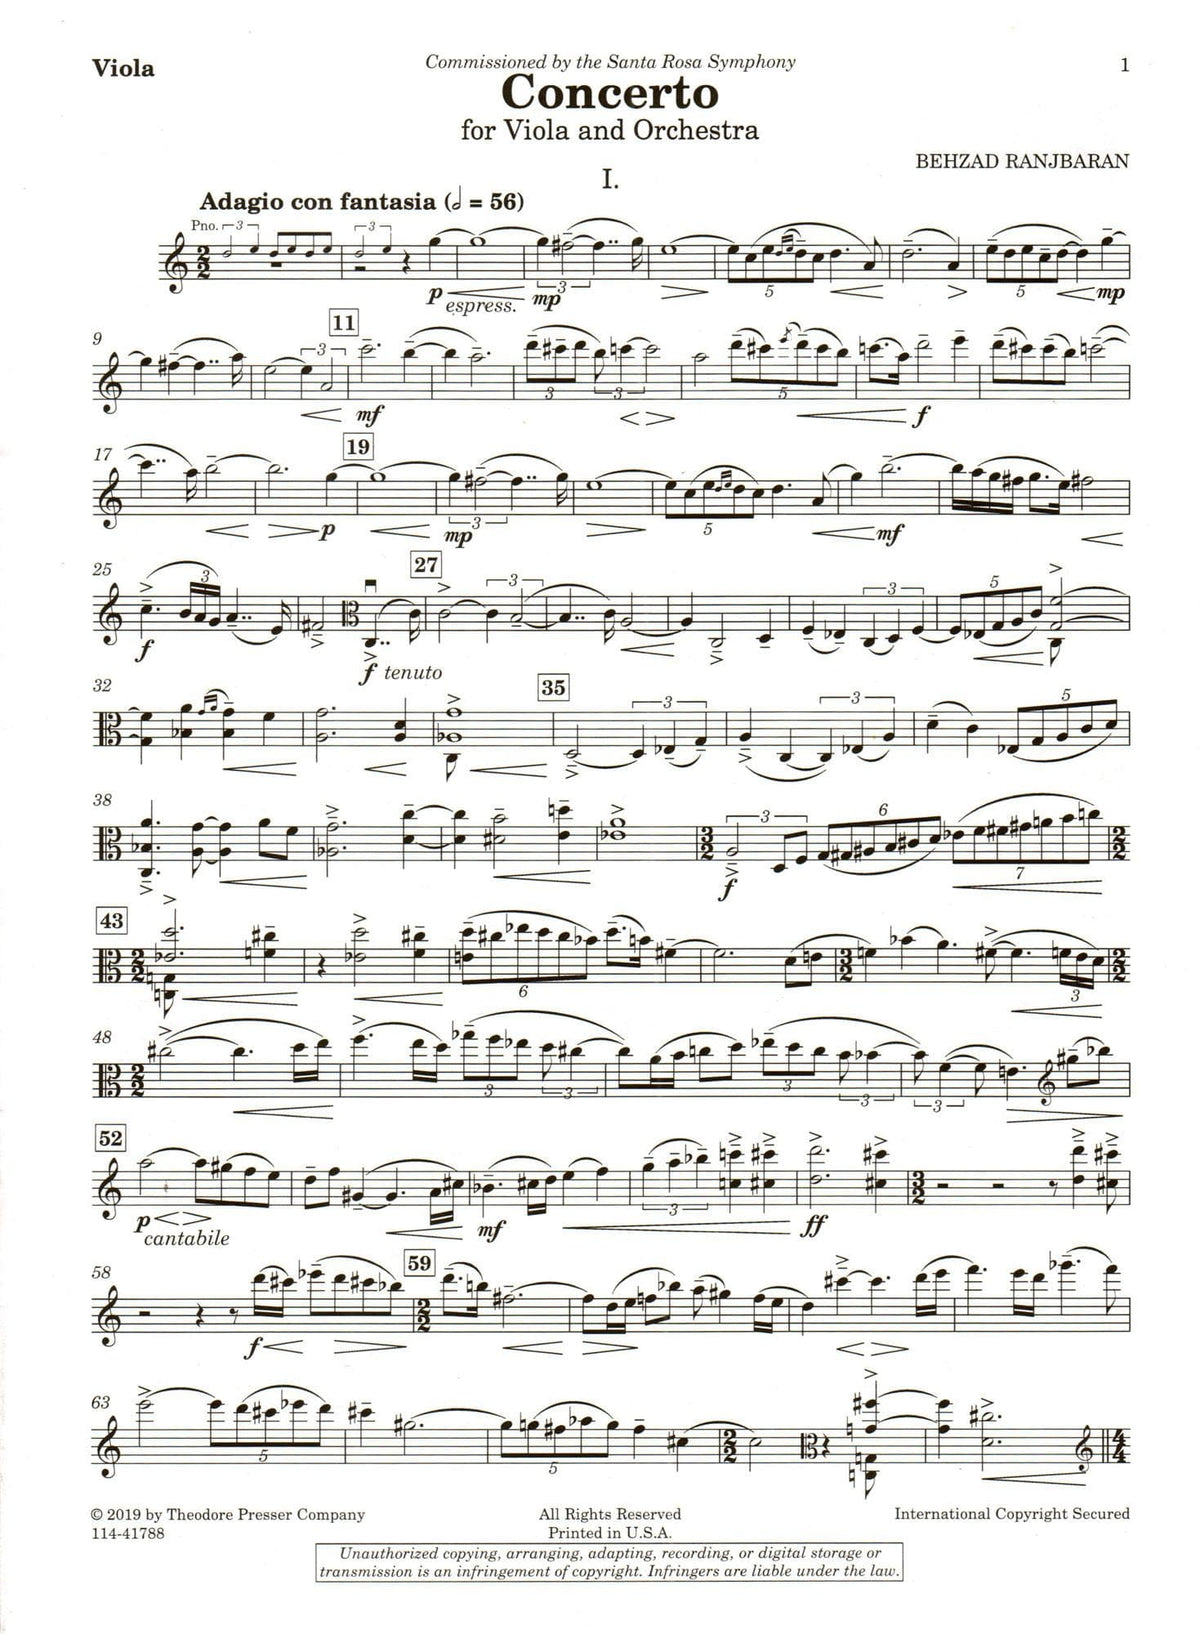 Ranjbaran, Behzad - Concerto for Viola and Orchestra - for Viola and Piano - Theodore Presser